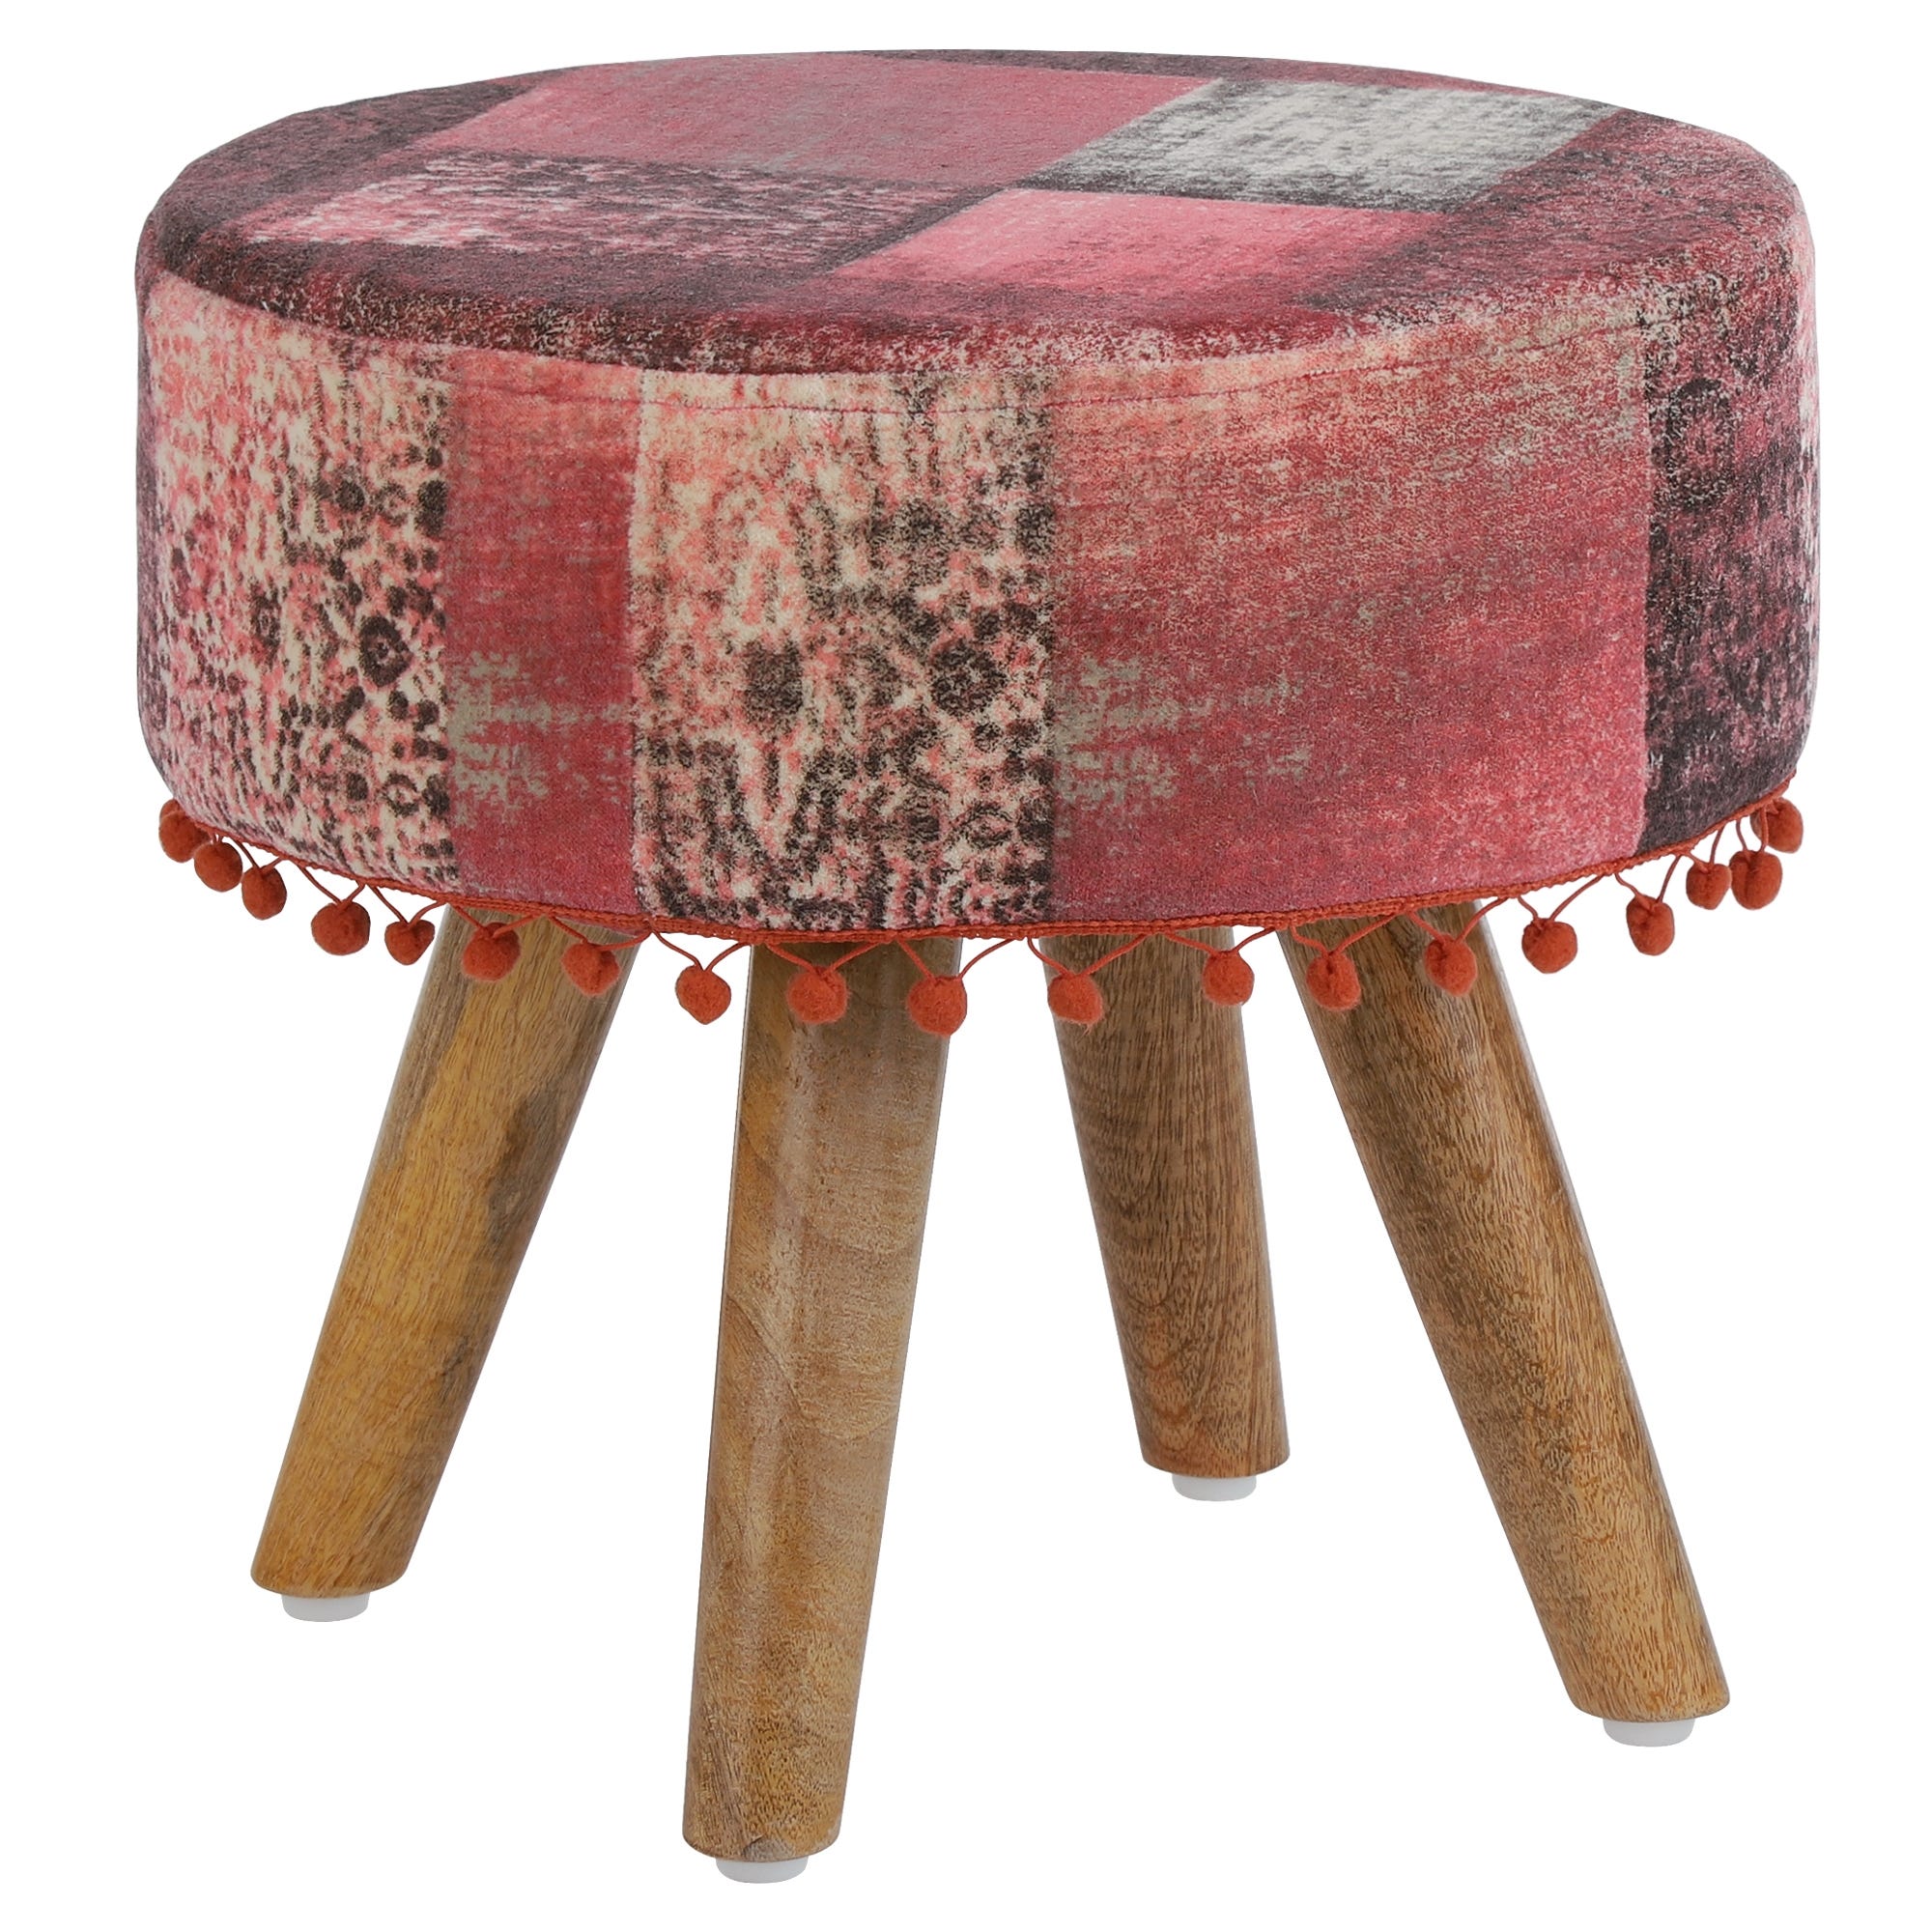 Taburete plegable de madera con asiento tapizado